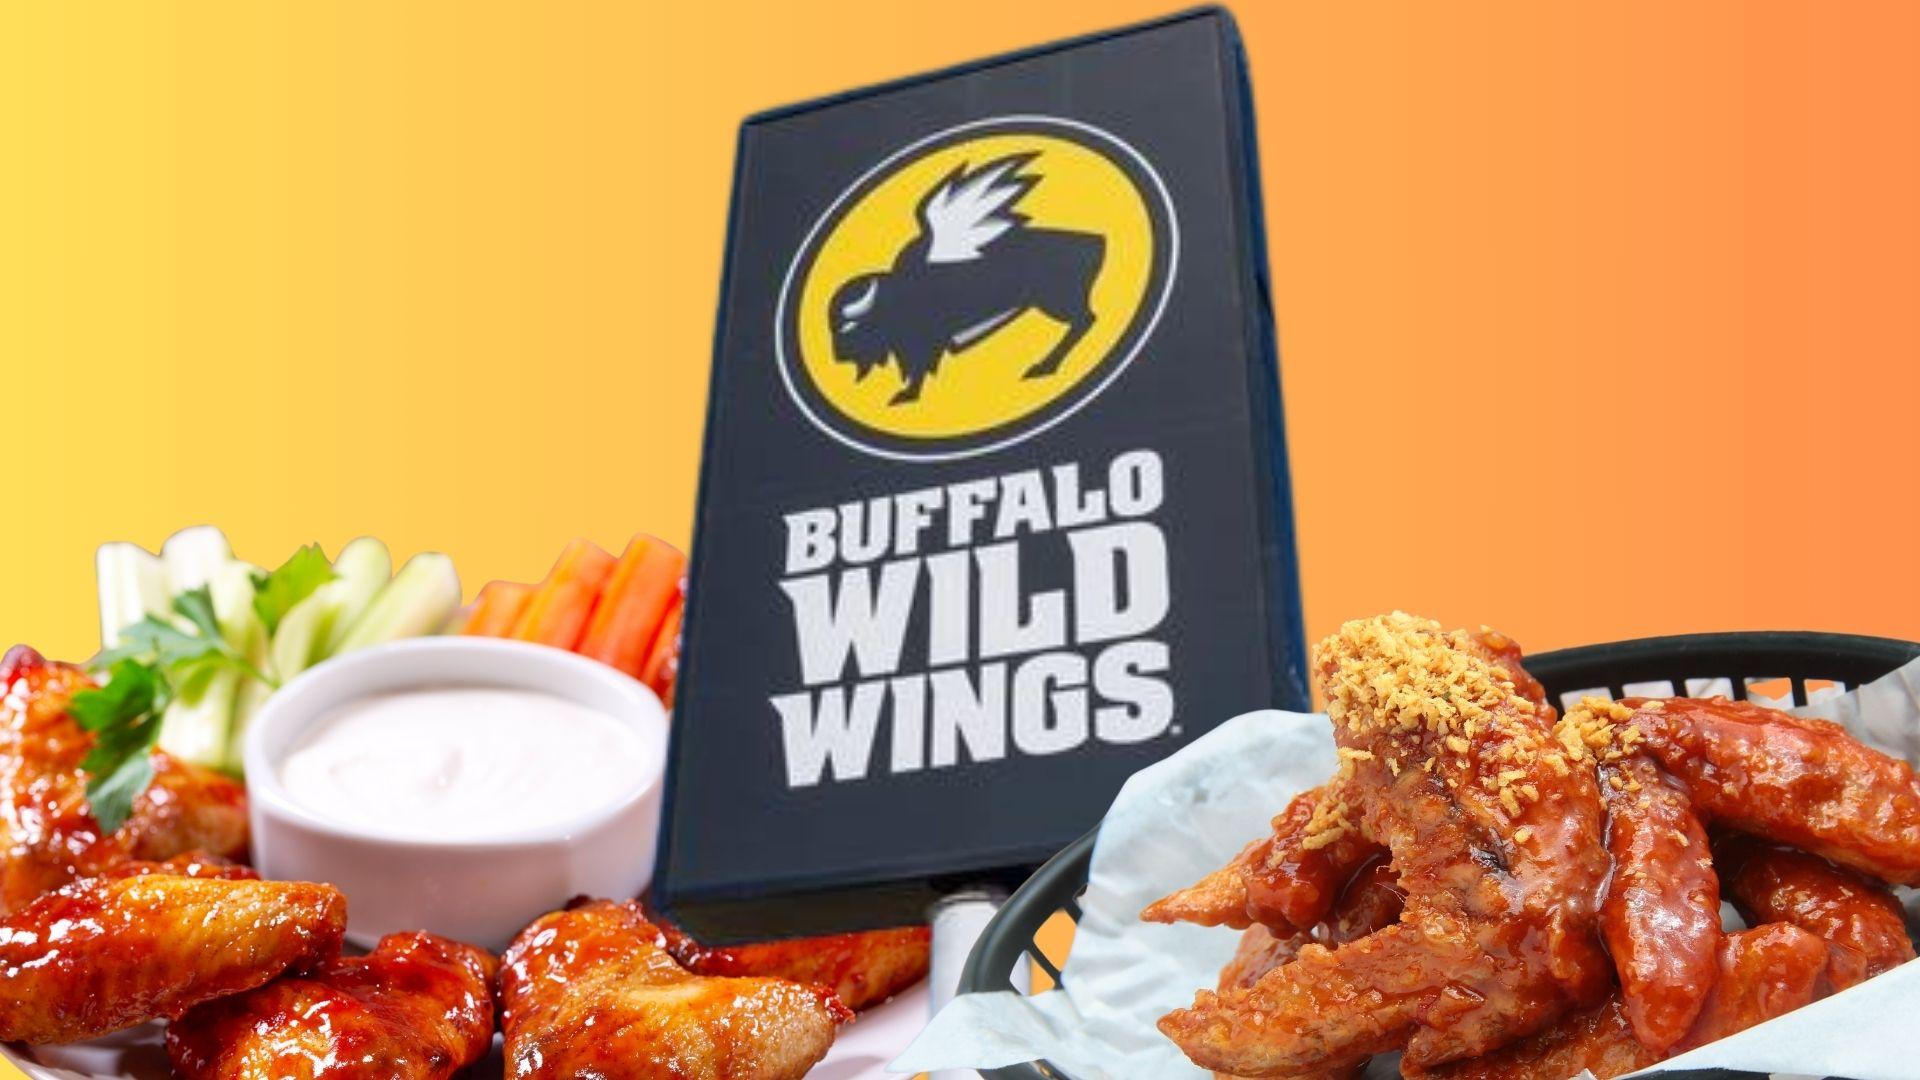 Buffalo wild wings logo